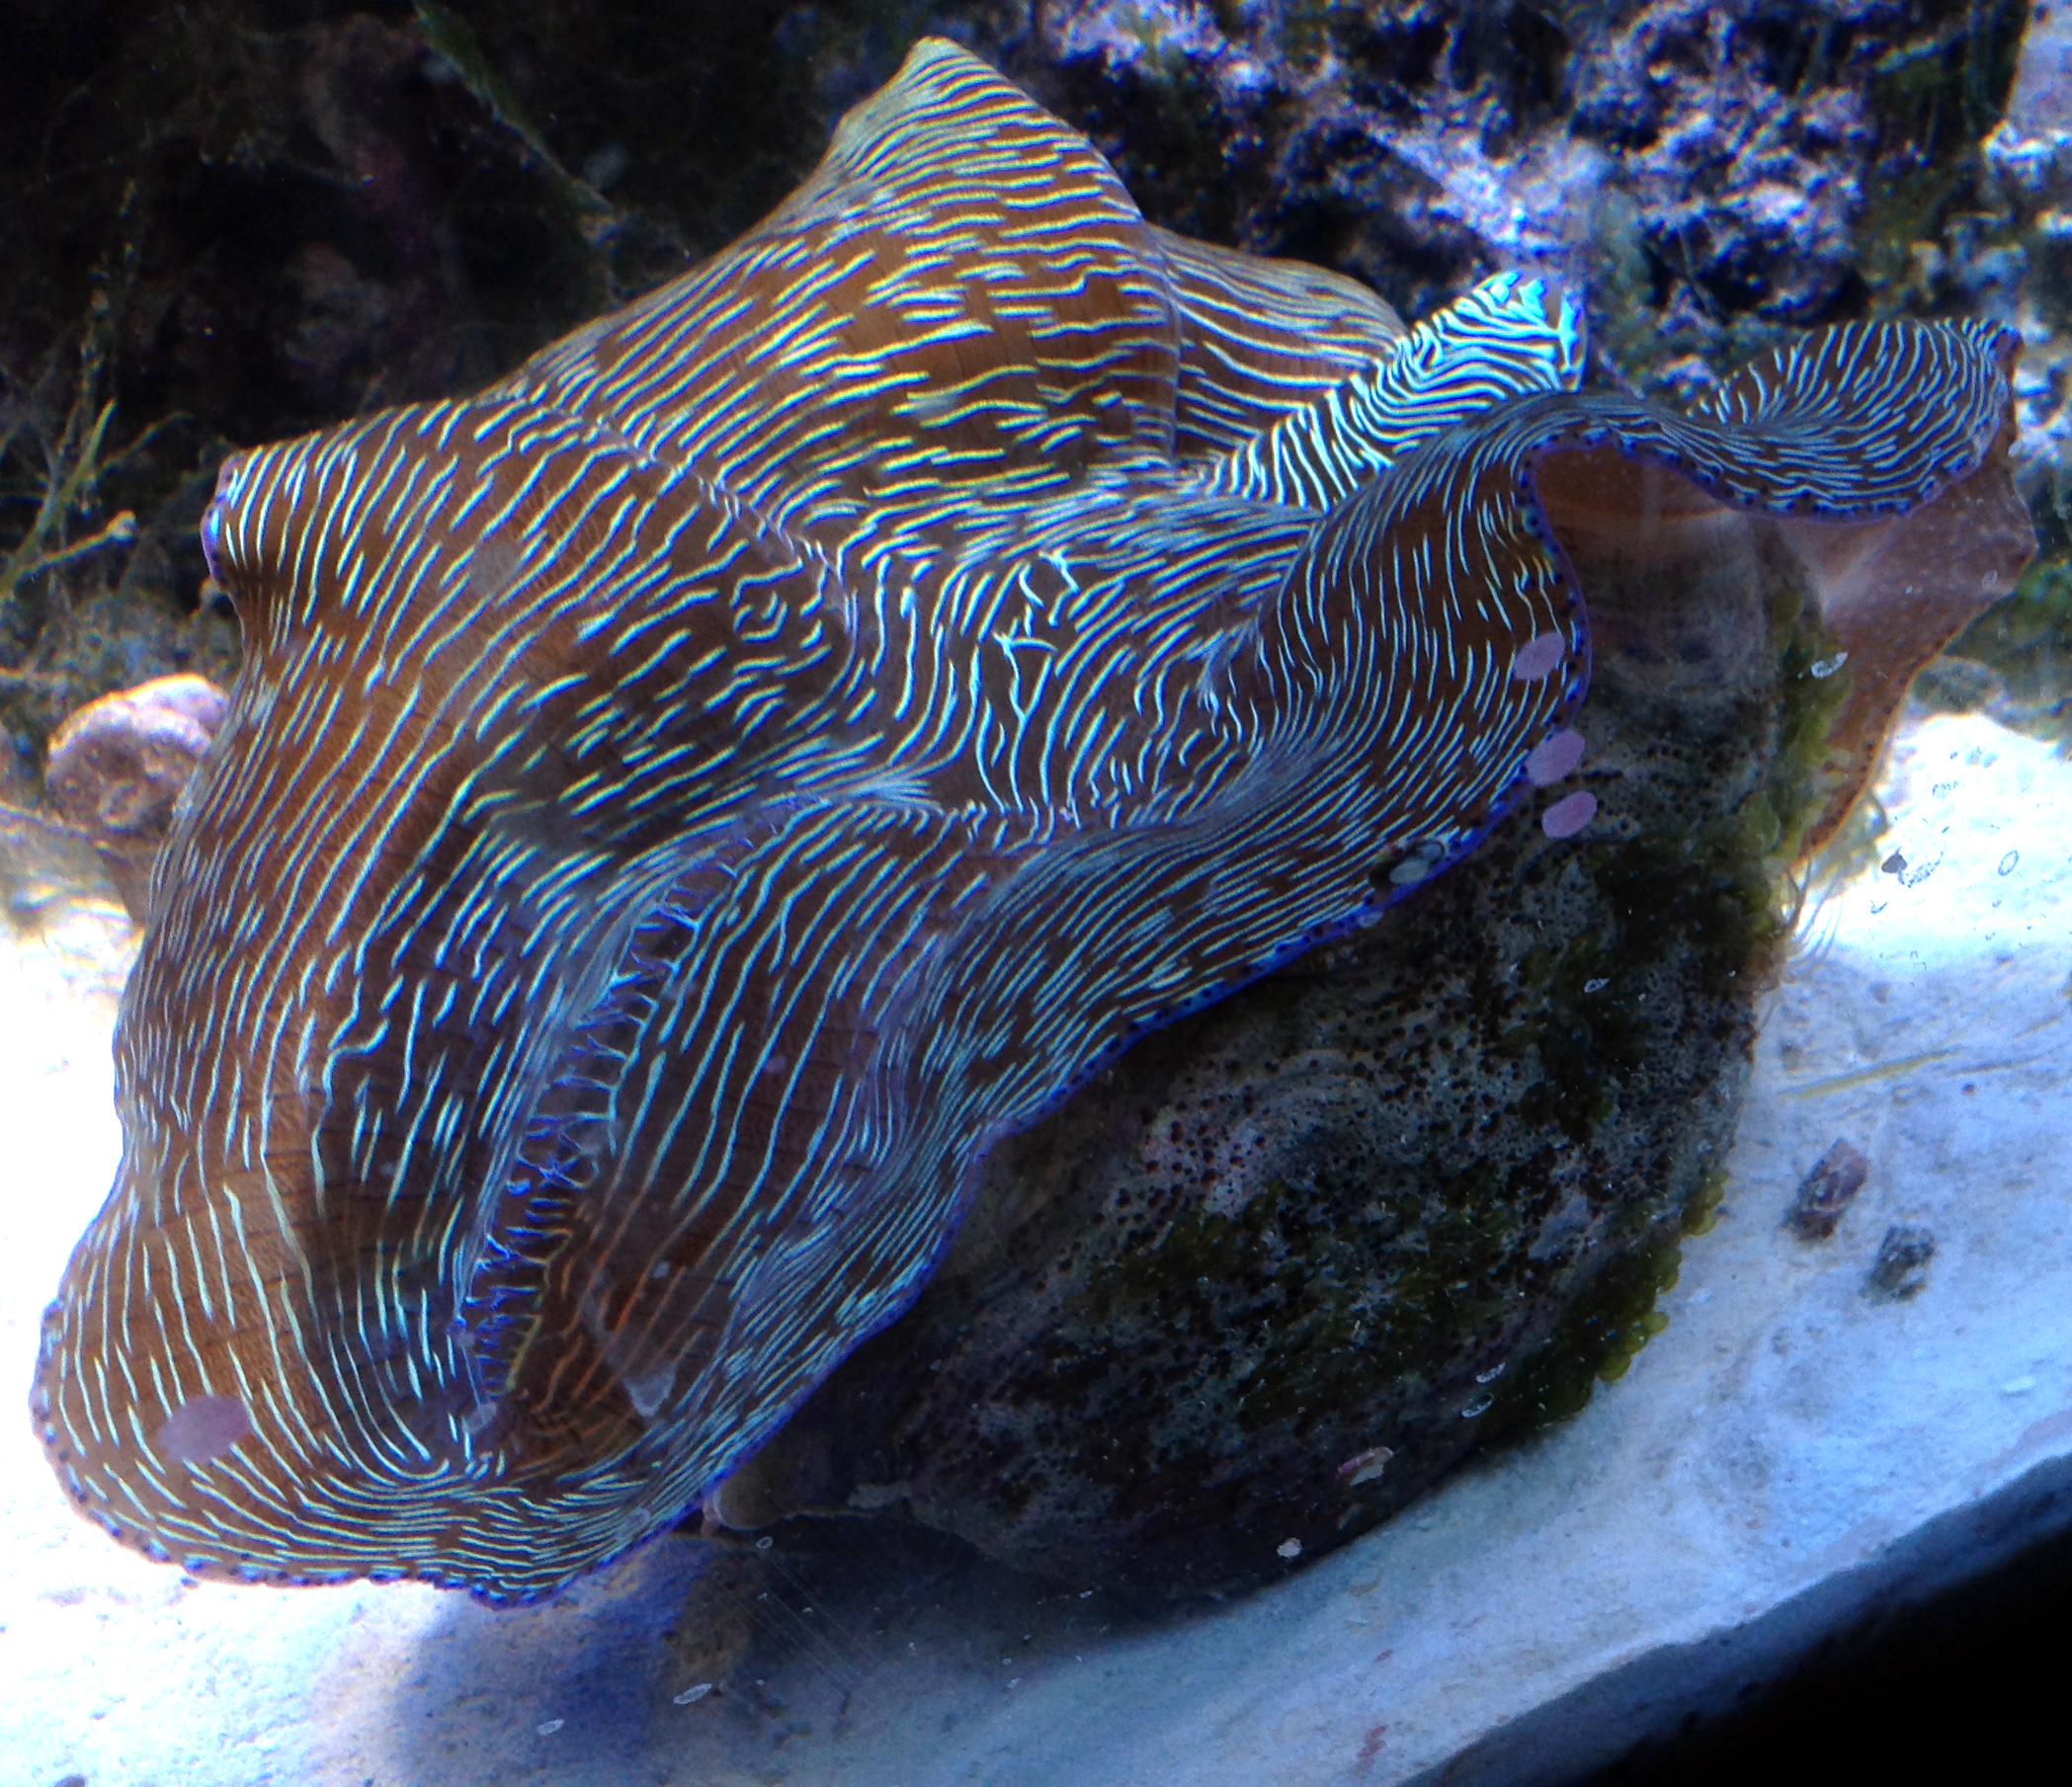 maxima clam size